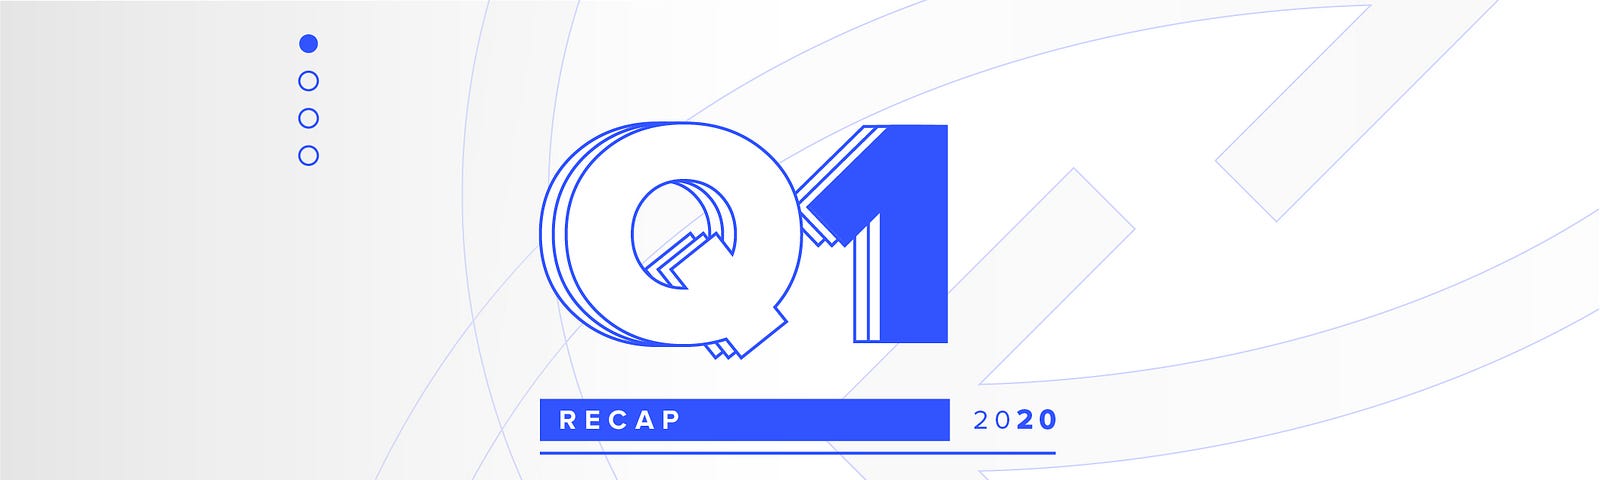 Say hi to 2020’s first quarterly Recap.